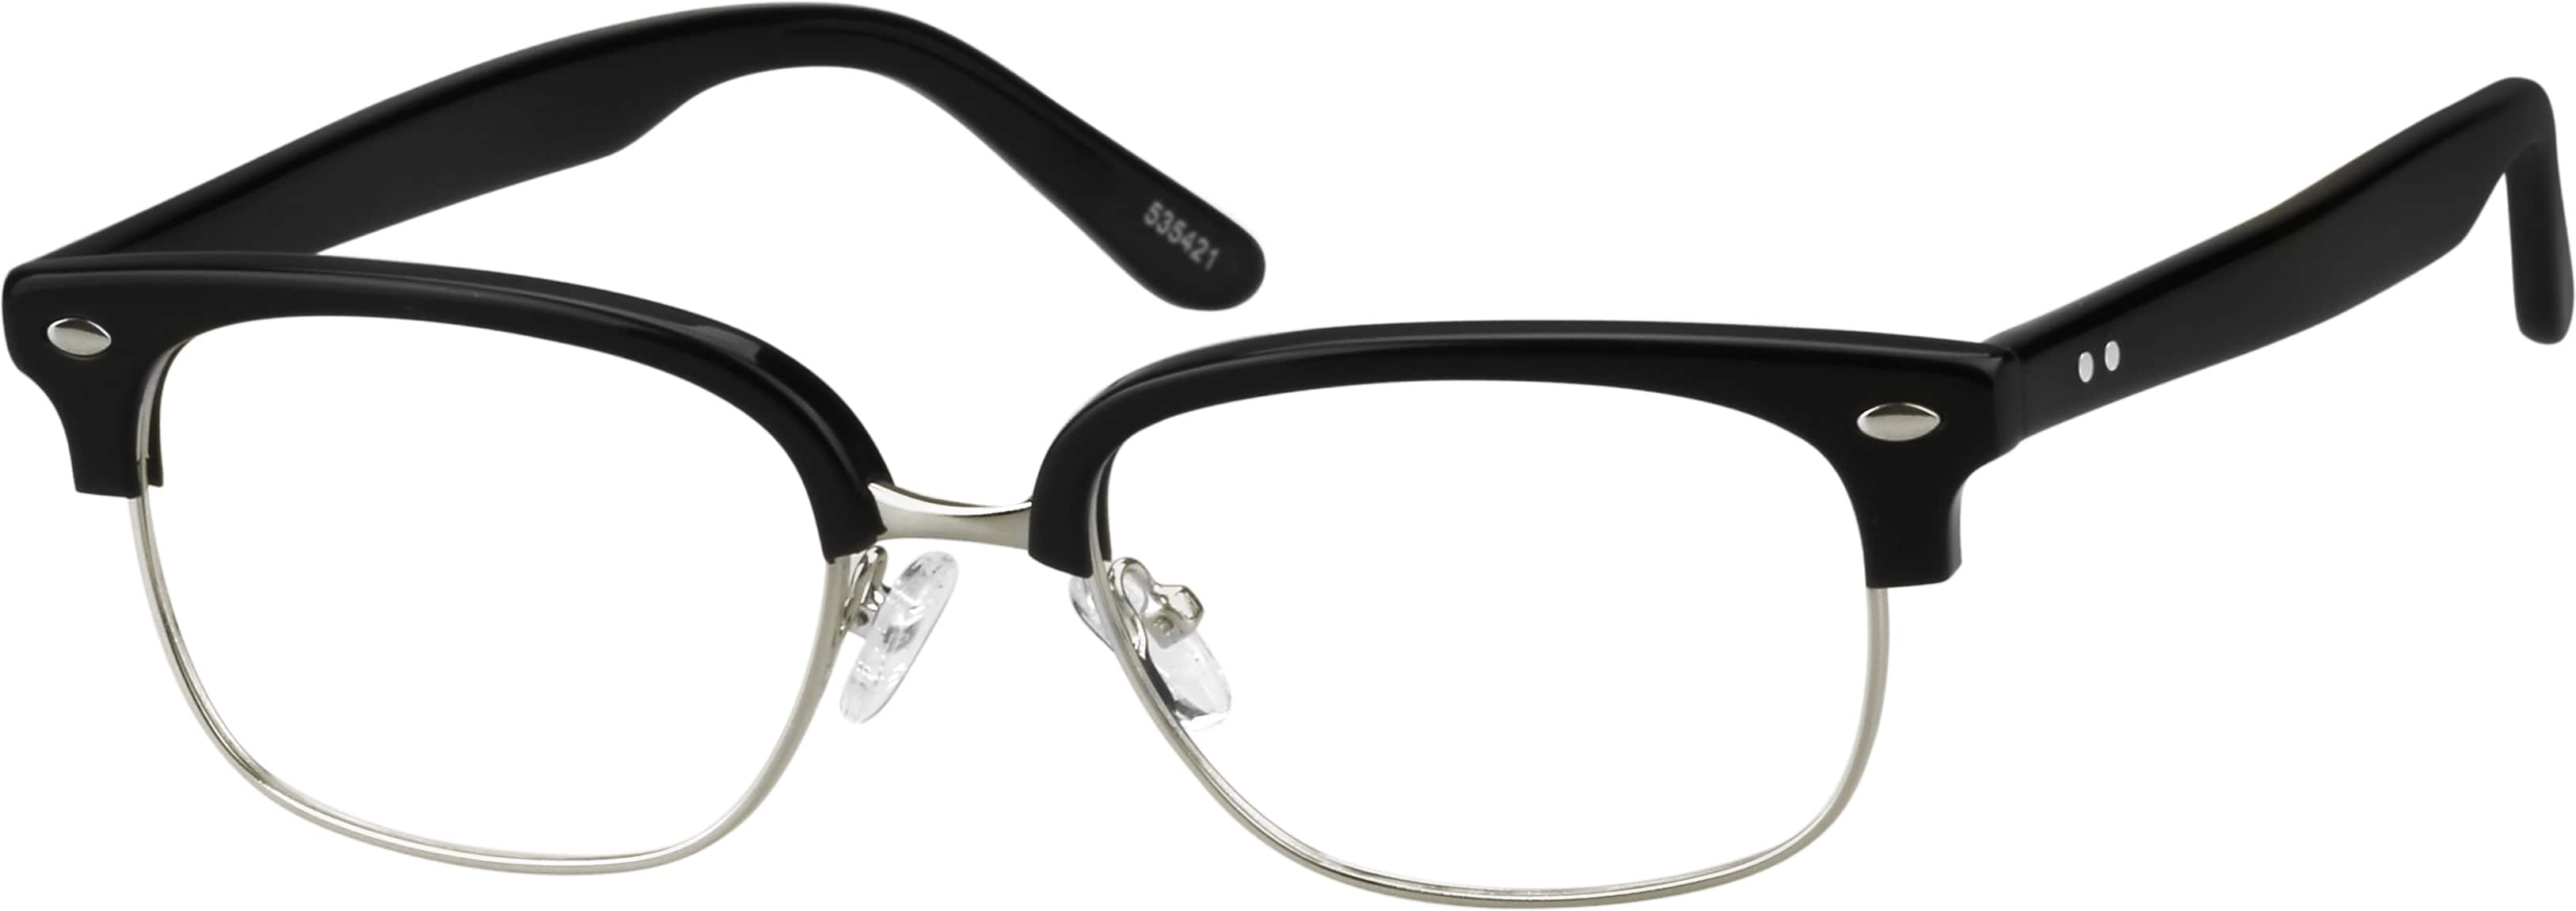 Zenni Black Browline Eyeglasses